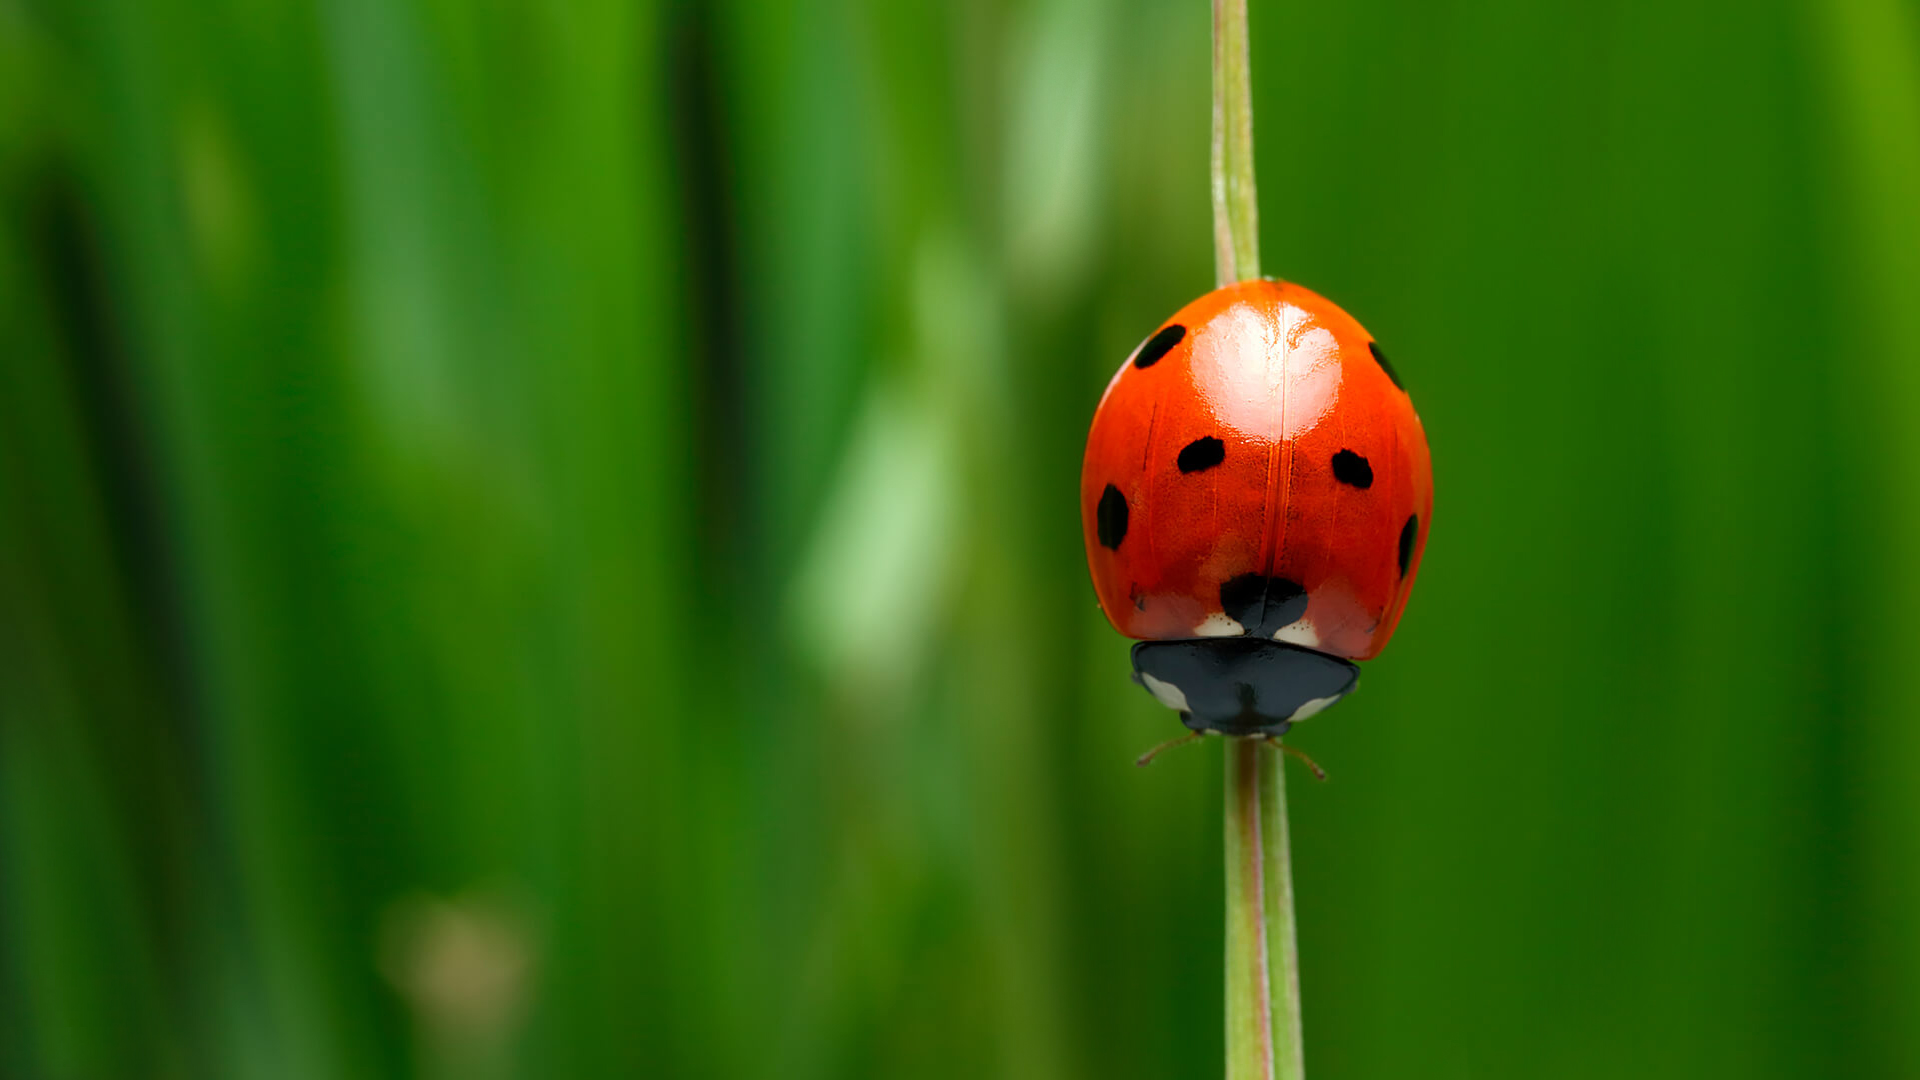 Ladybug crawling down a blade of grass